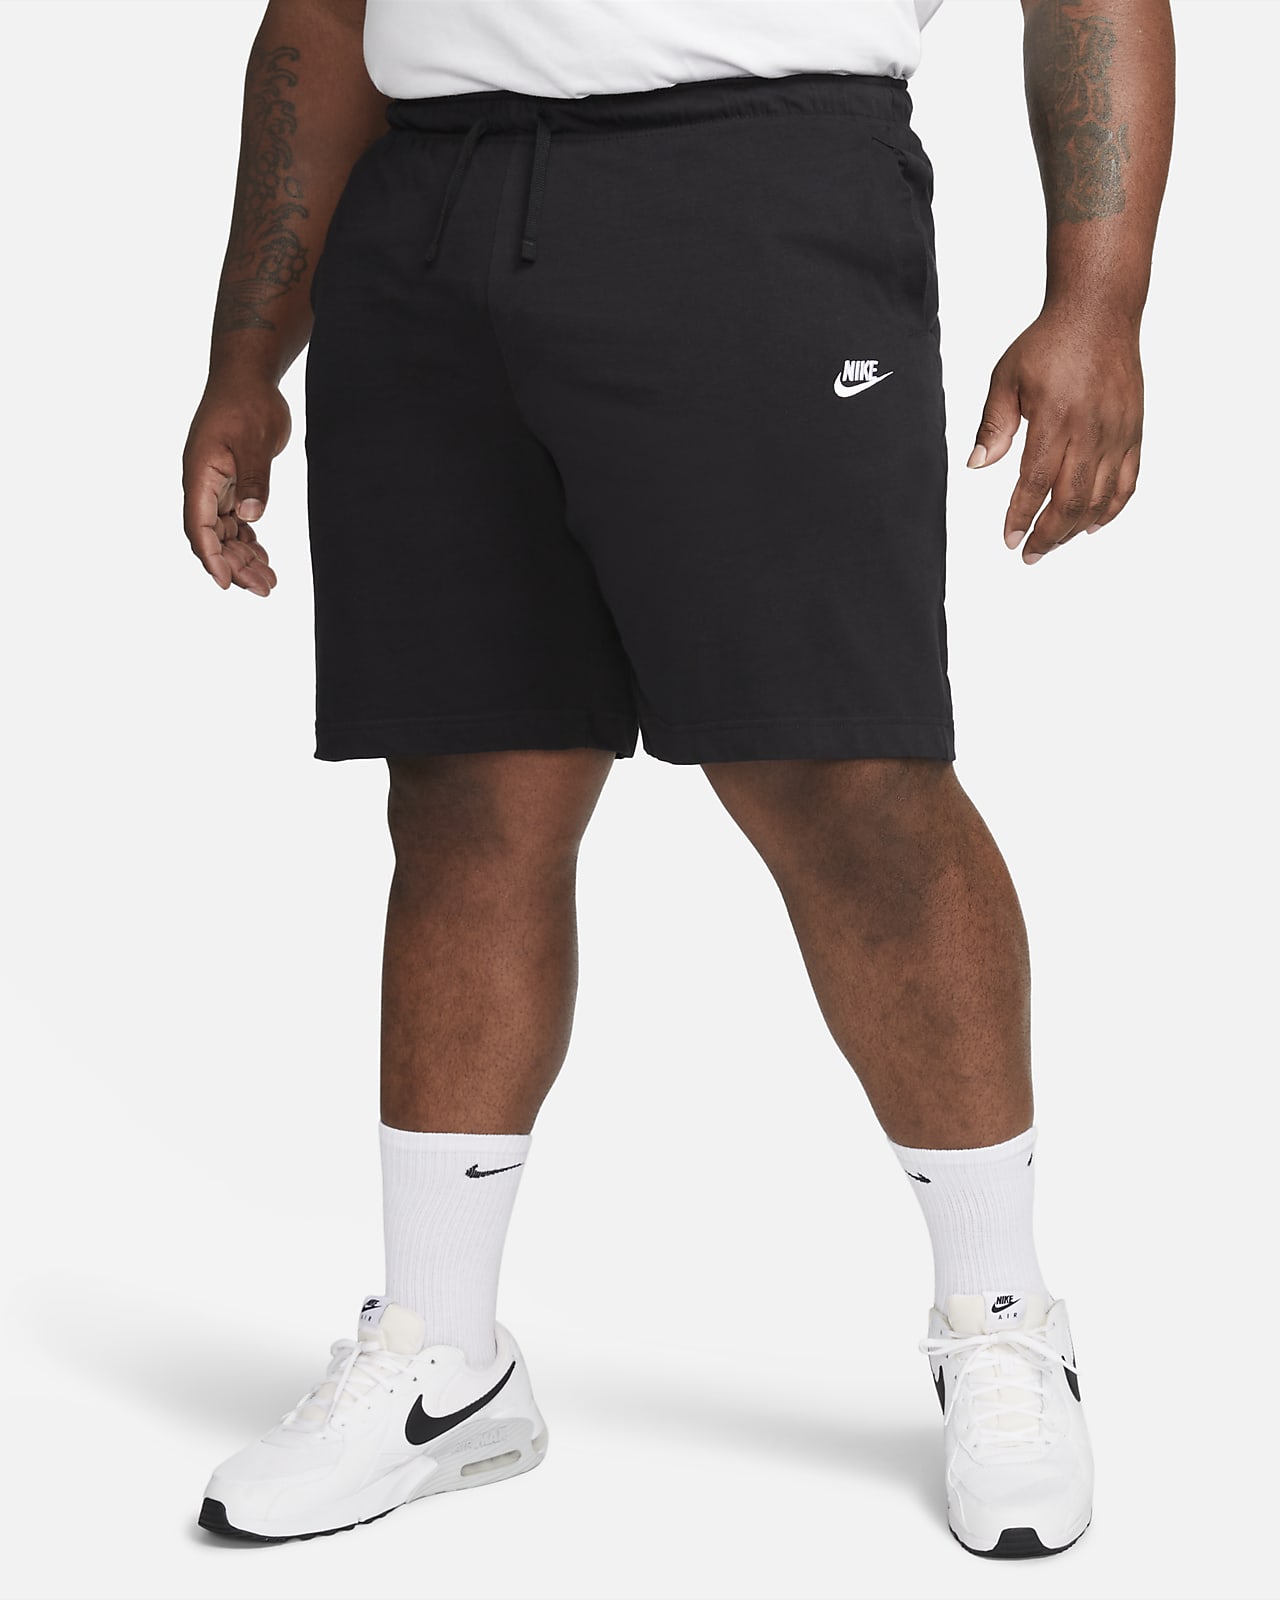 Short Nike Pro Cool - 23 cm - Pour homme - Blanc - Taille S